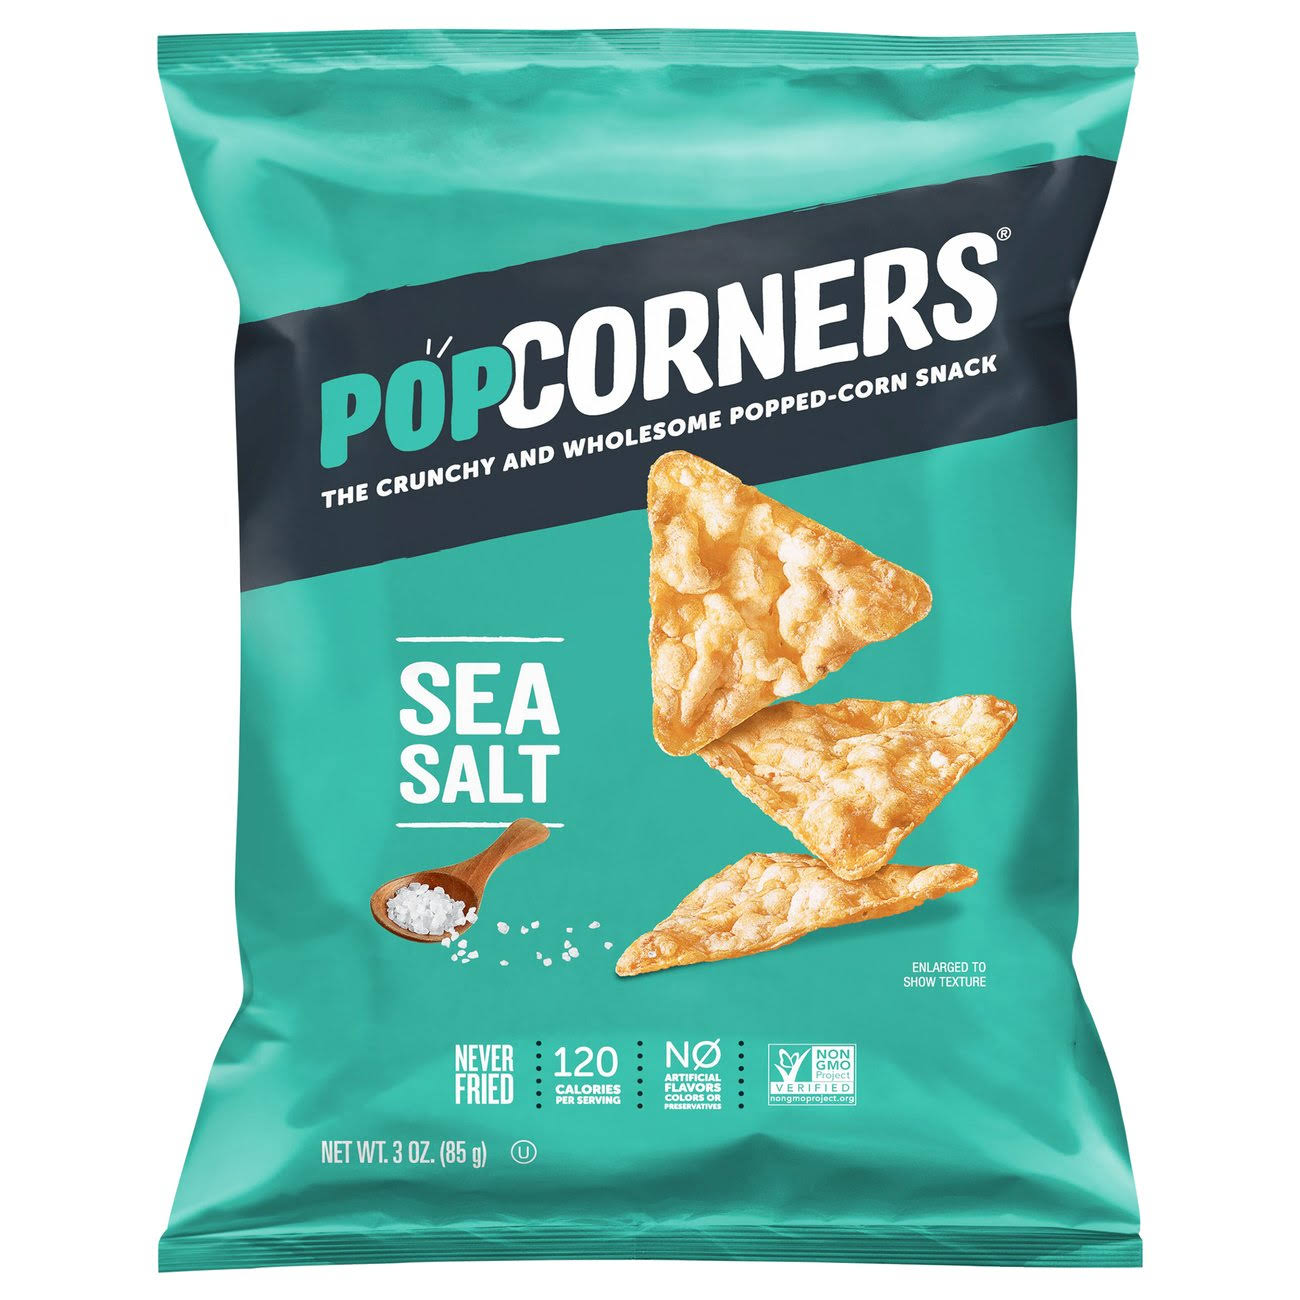 Popcorners Popped Corn Chips - Sea Salt, 5oz